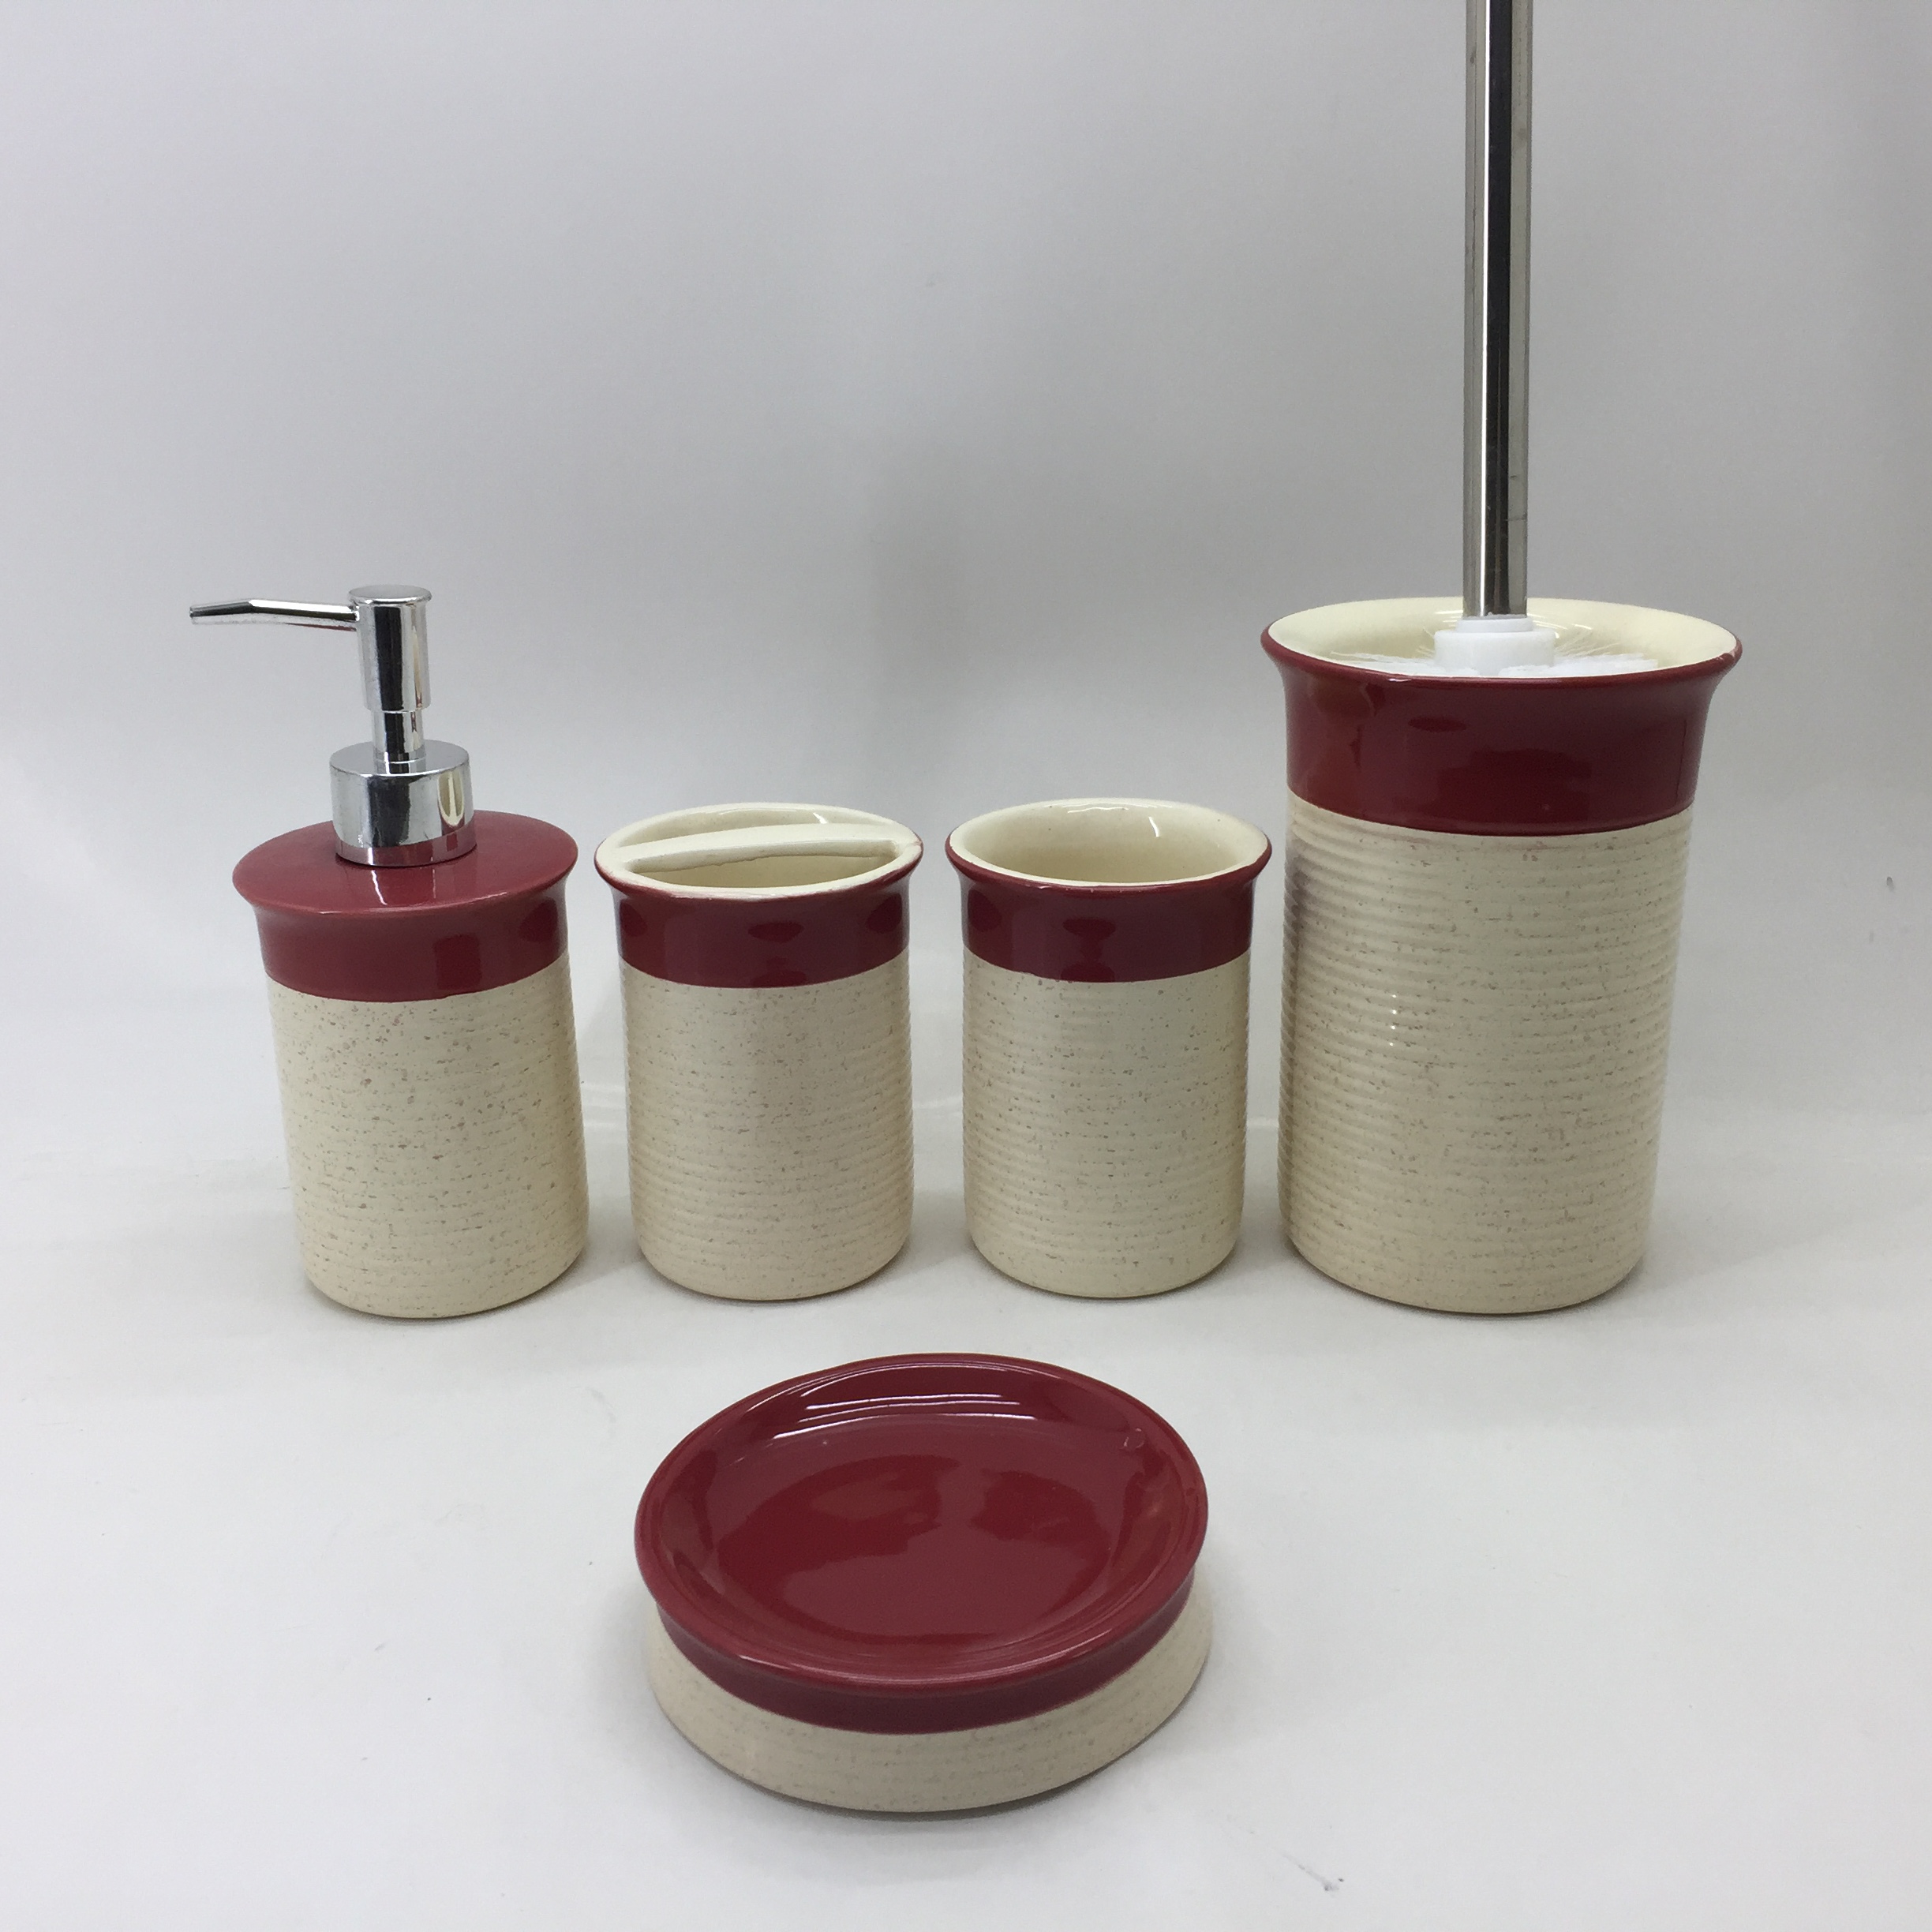 5 Piece Ceramic Bathroom Accessories Set with Toilet Brush Holder